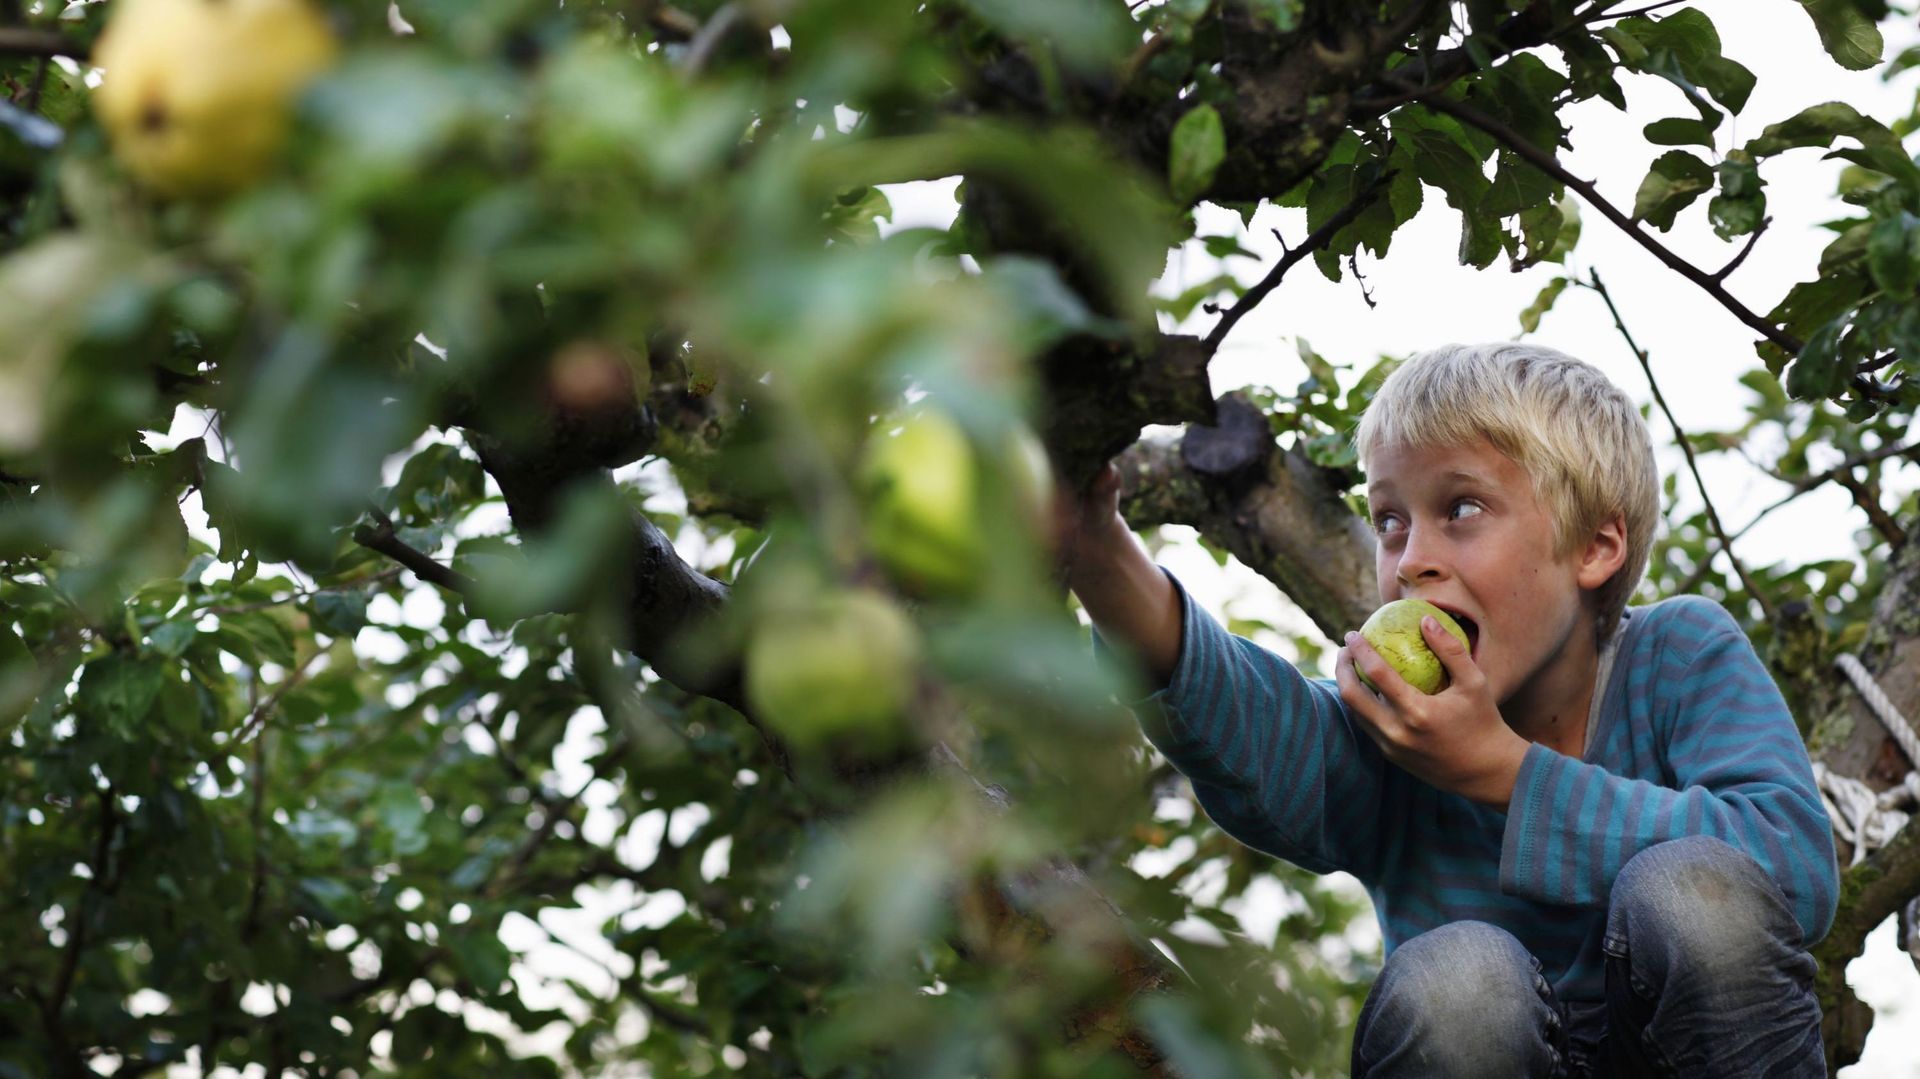 Boy eating in fruit tree